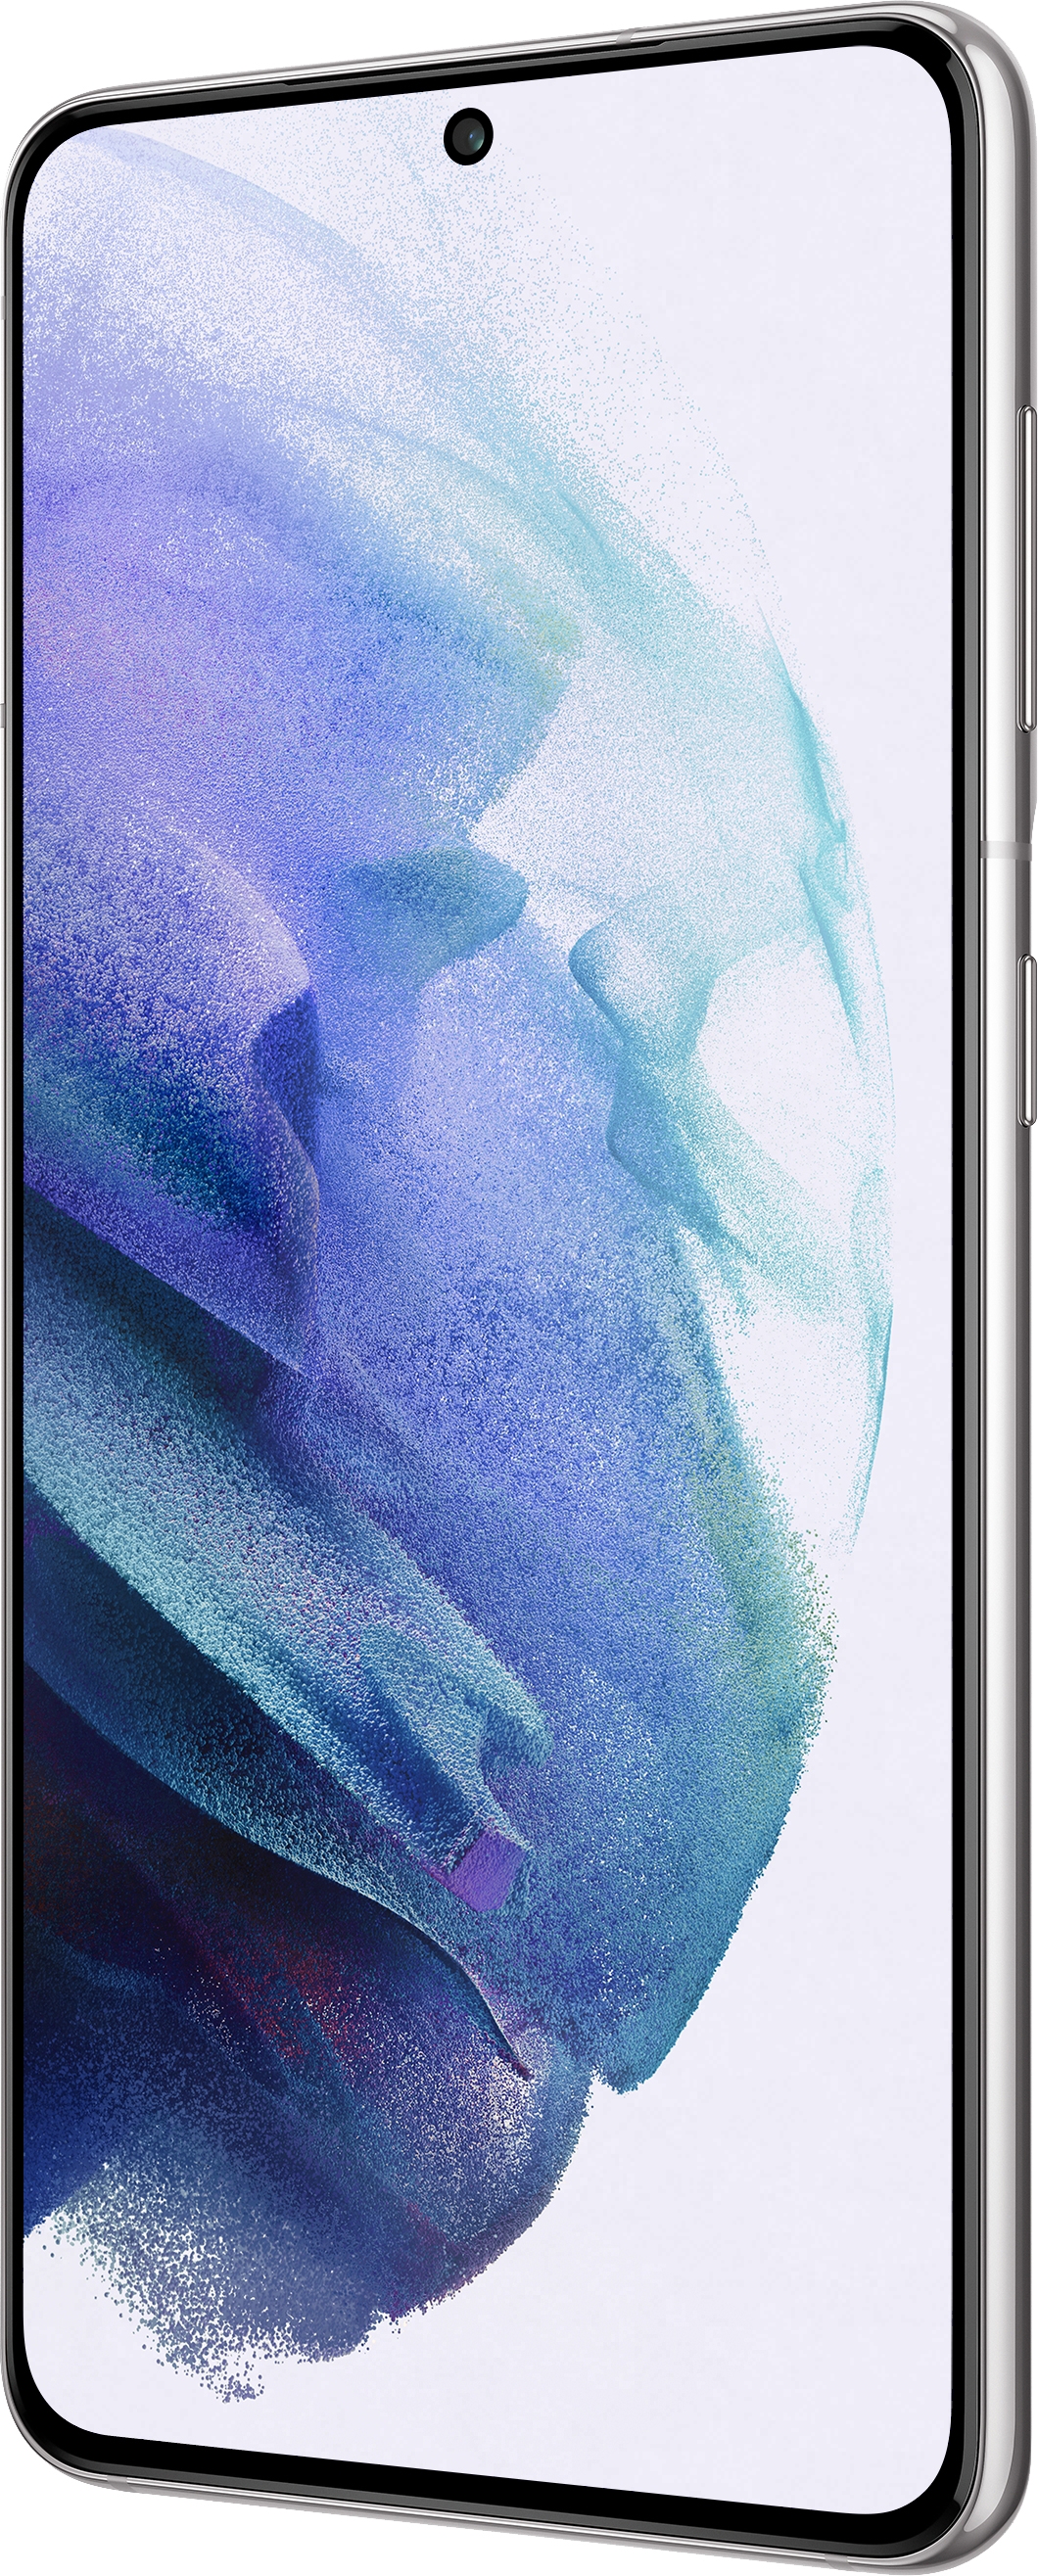 Samsung Galaxy S21 5G SM-G991B 8/256GB 